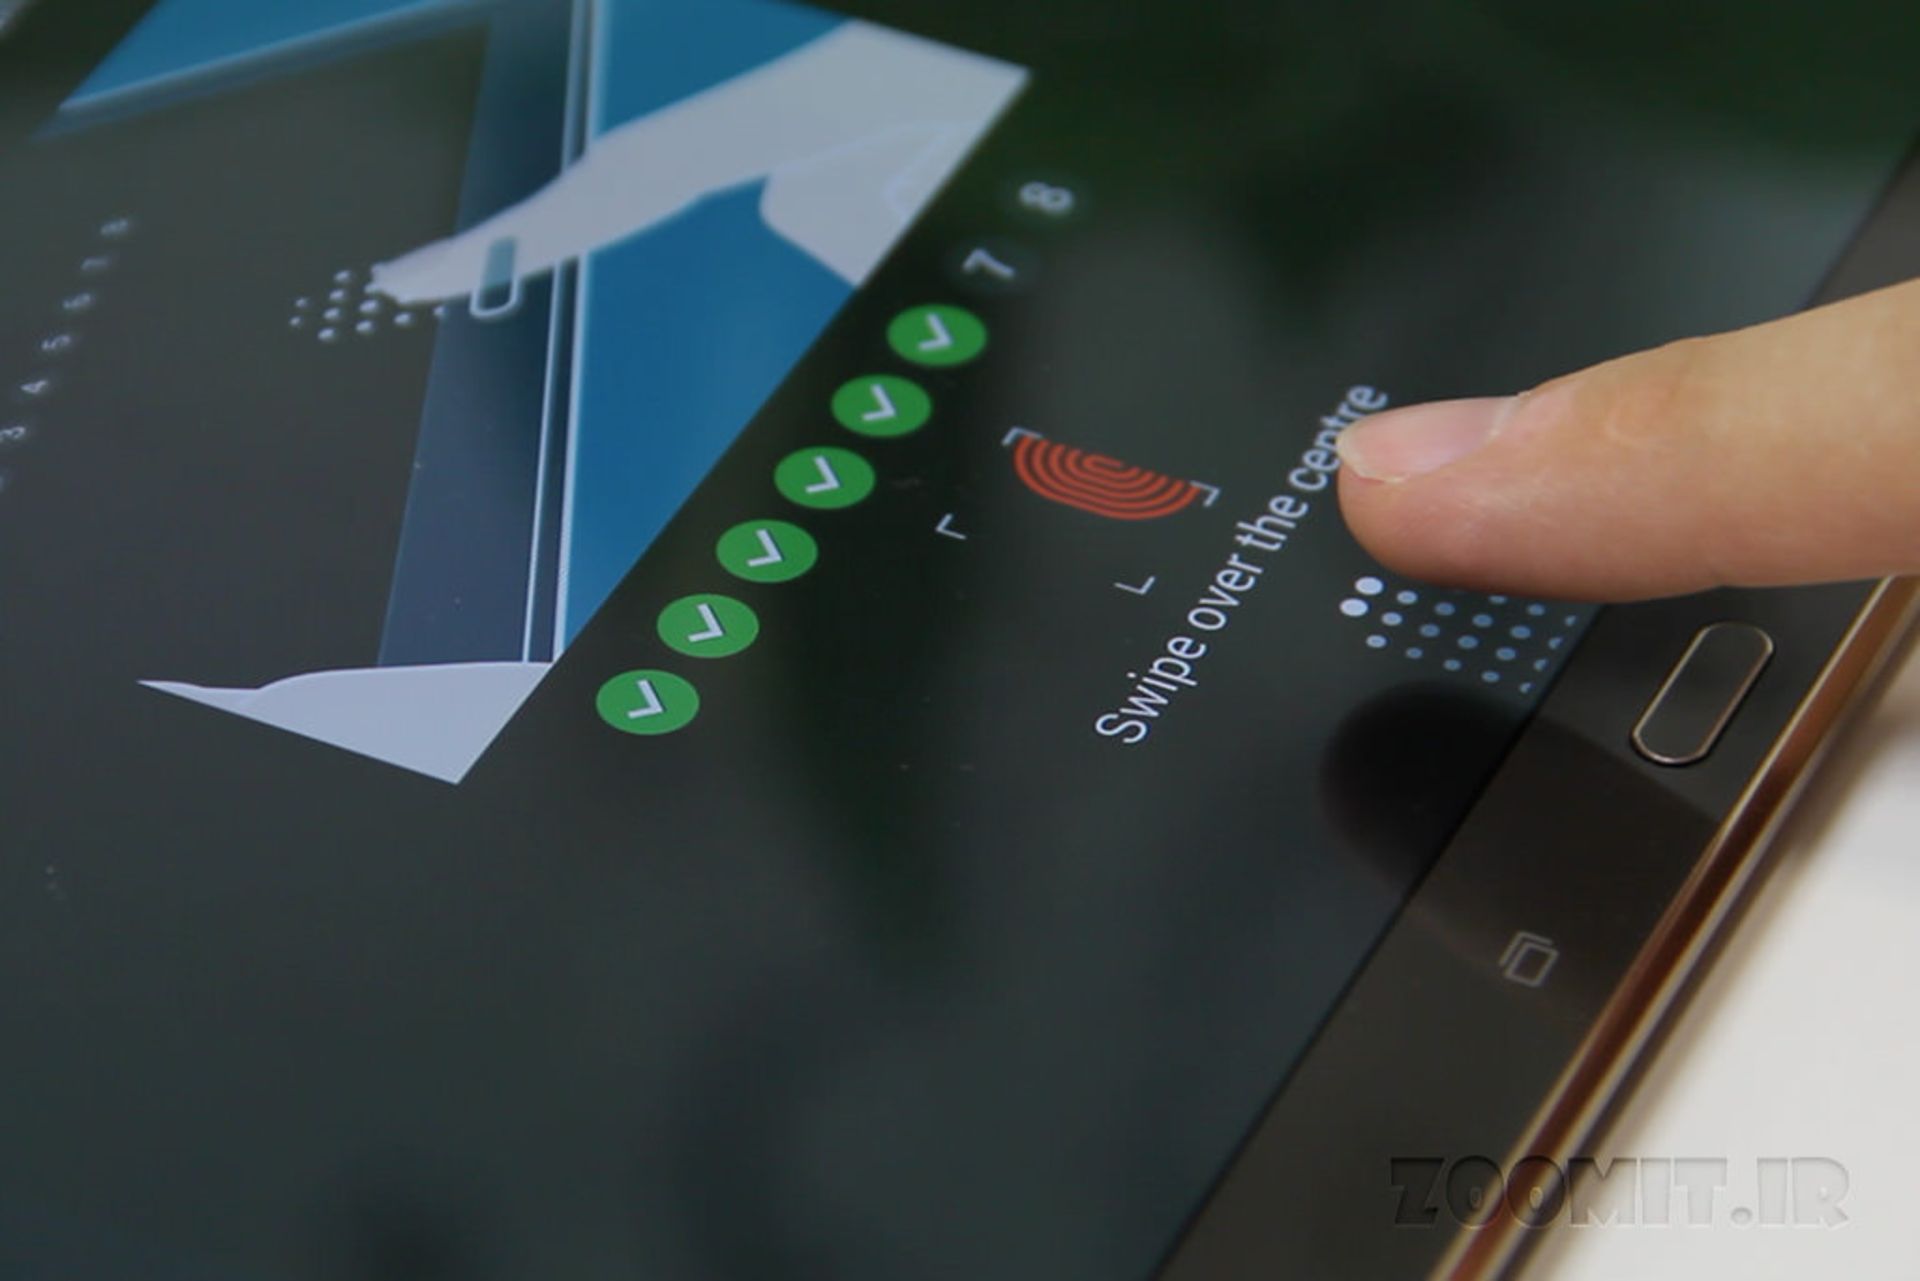 Galaxy Tab S 10.5 Fingerprint